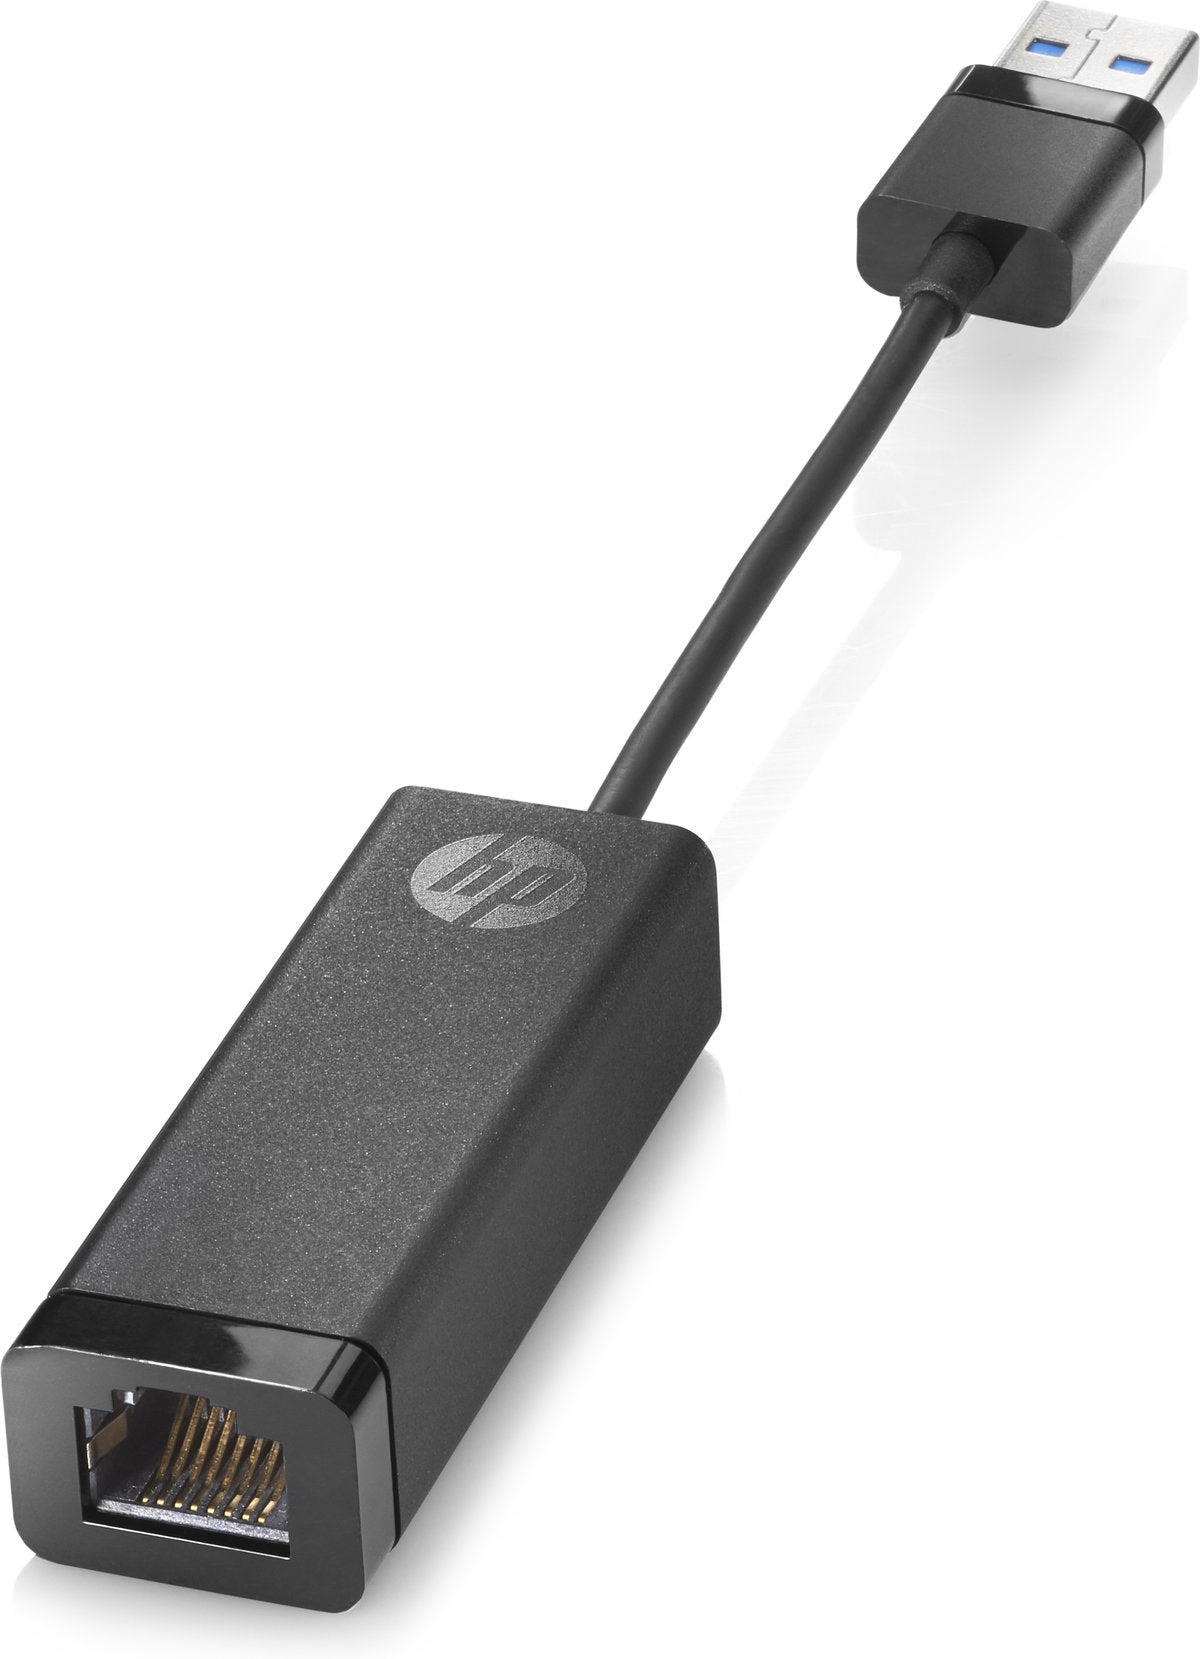 HP USB 3.0 to Gigabit RJ-45 Adapter (N7P47AA#ABA)